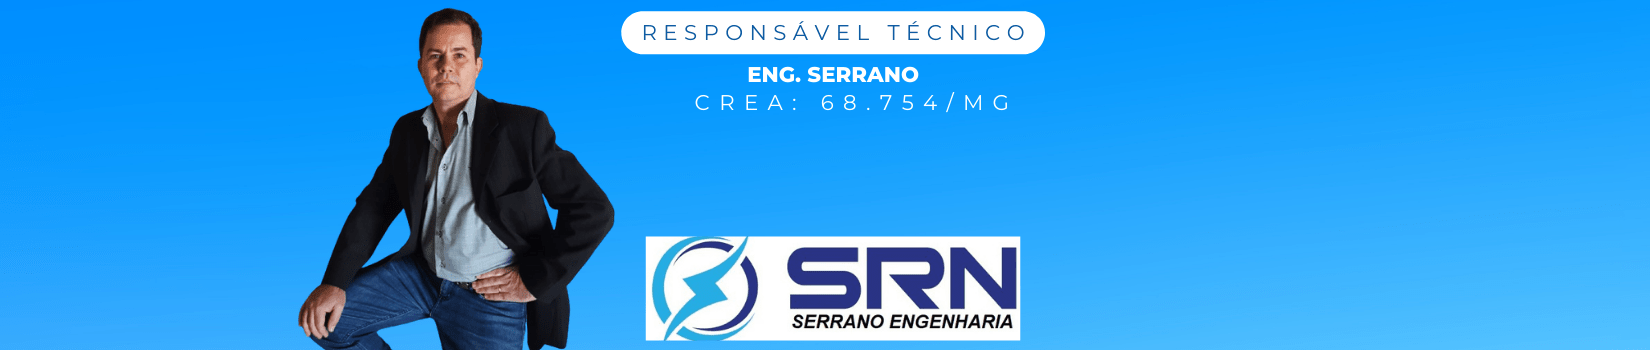 Serrano Engenharia